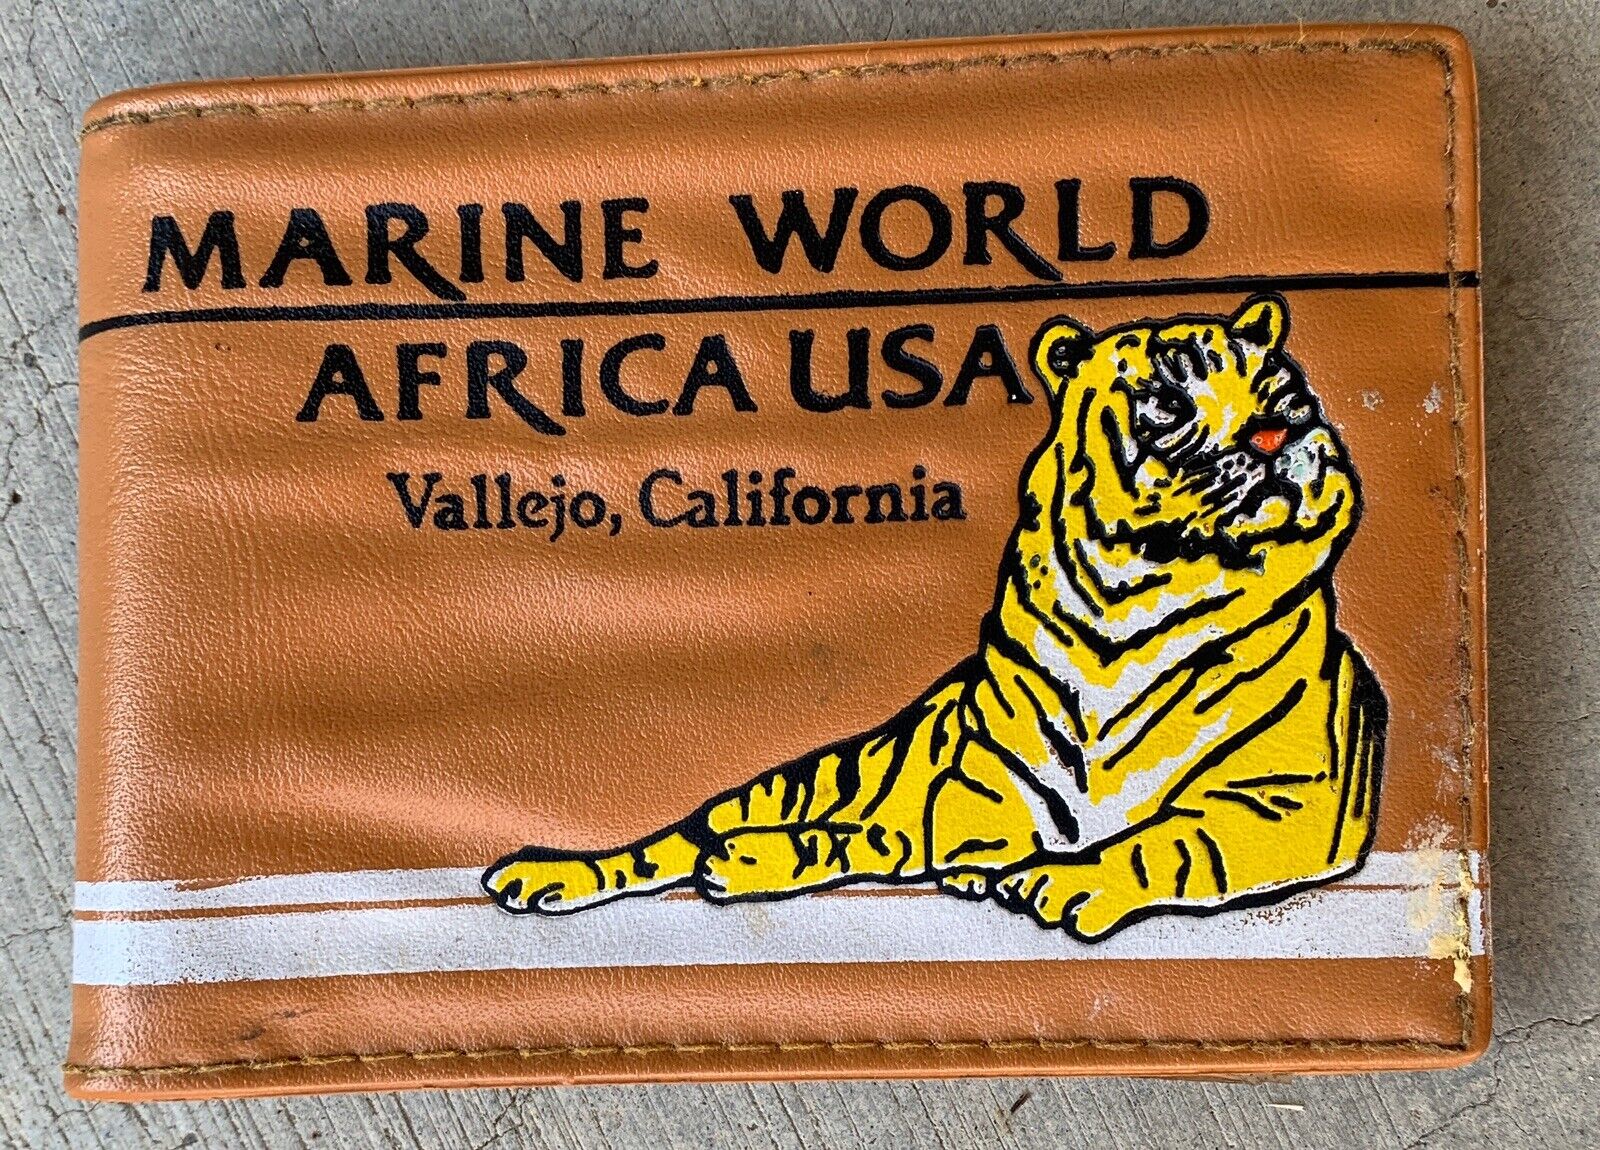 Vintage Marine World Africa USA Vallejo California Wallet Tiger